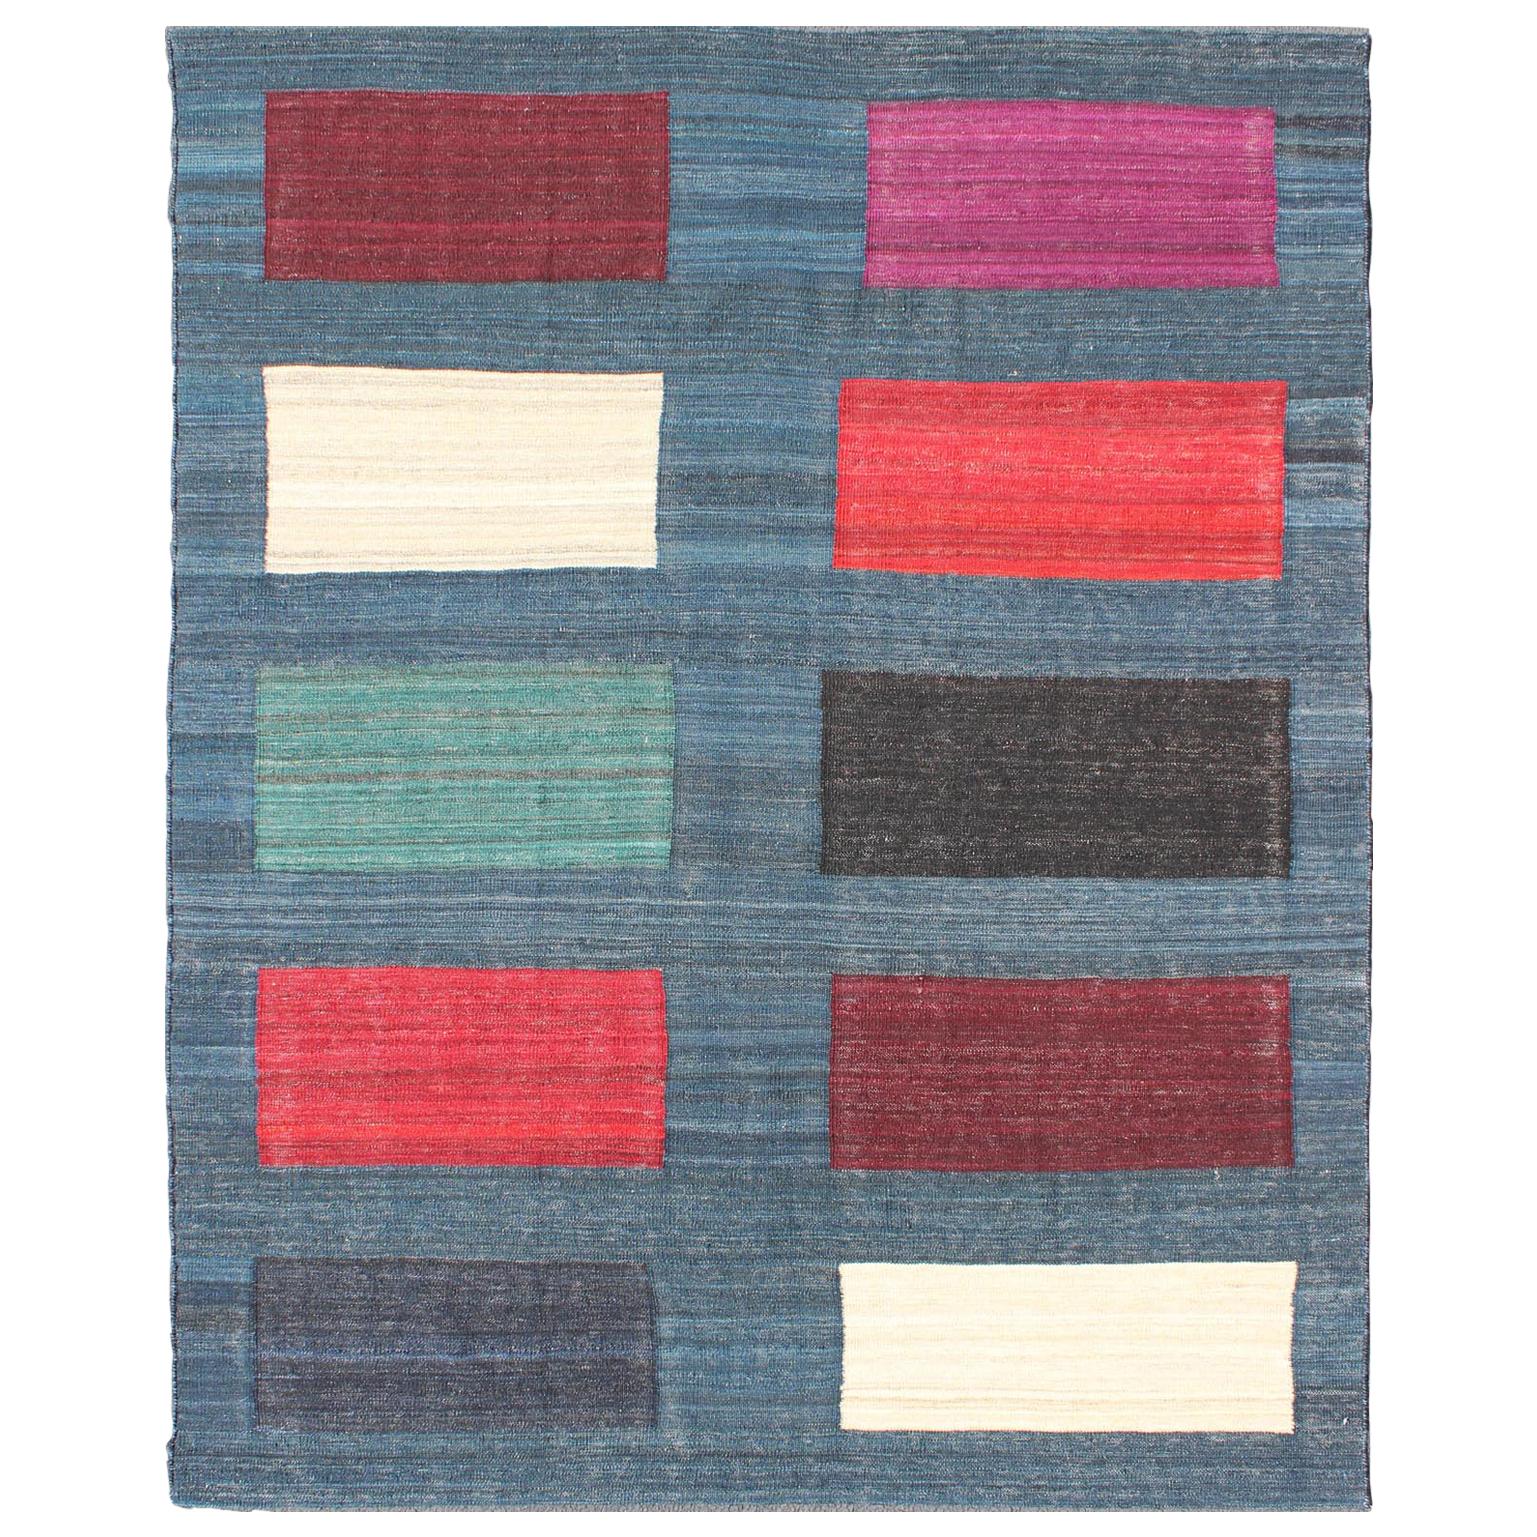 Modern Afghan Flat-Weave Rug in Steal Blue and Multicolored Blocks